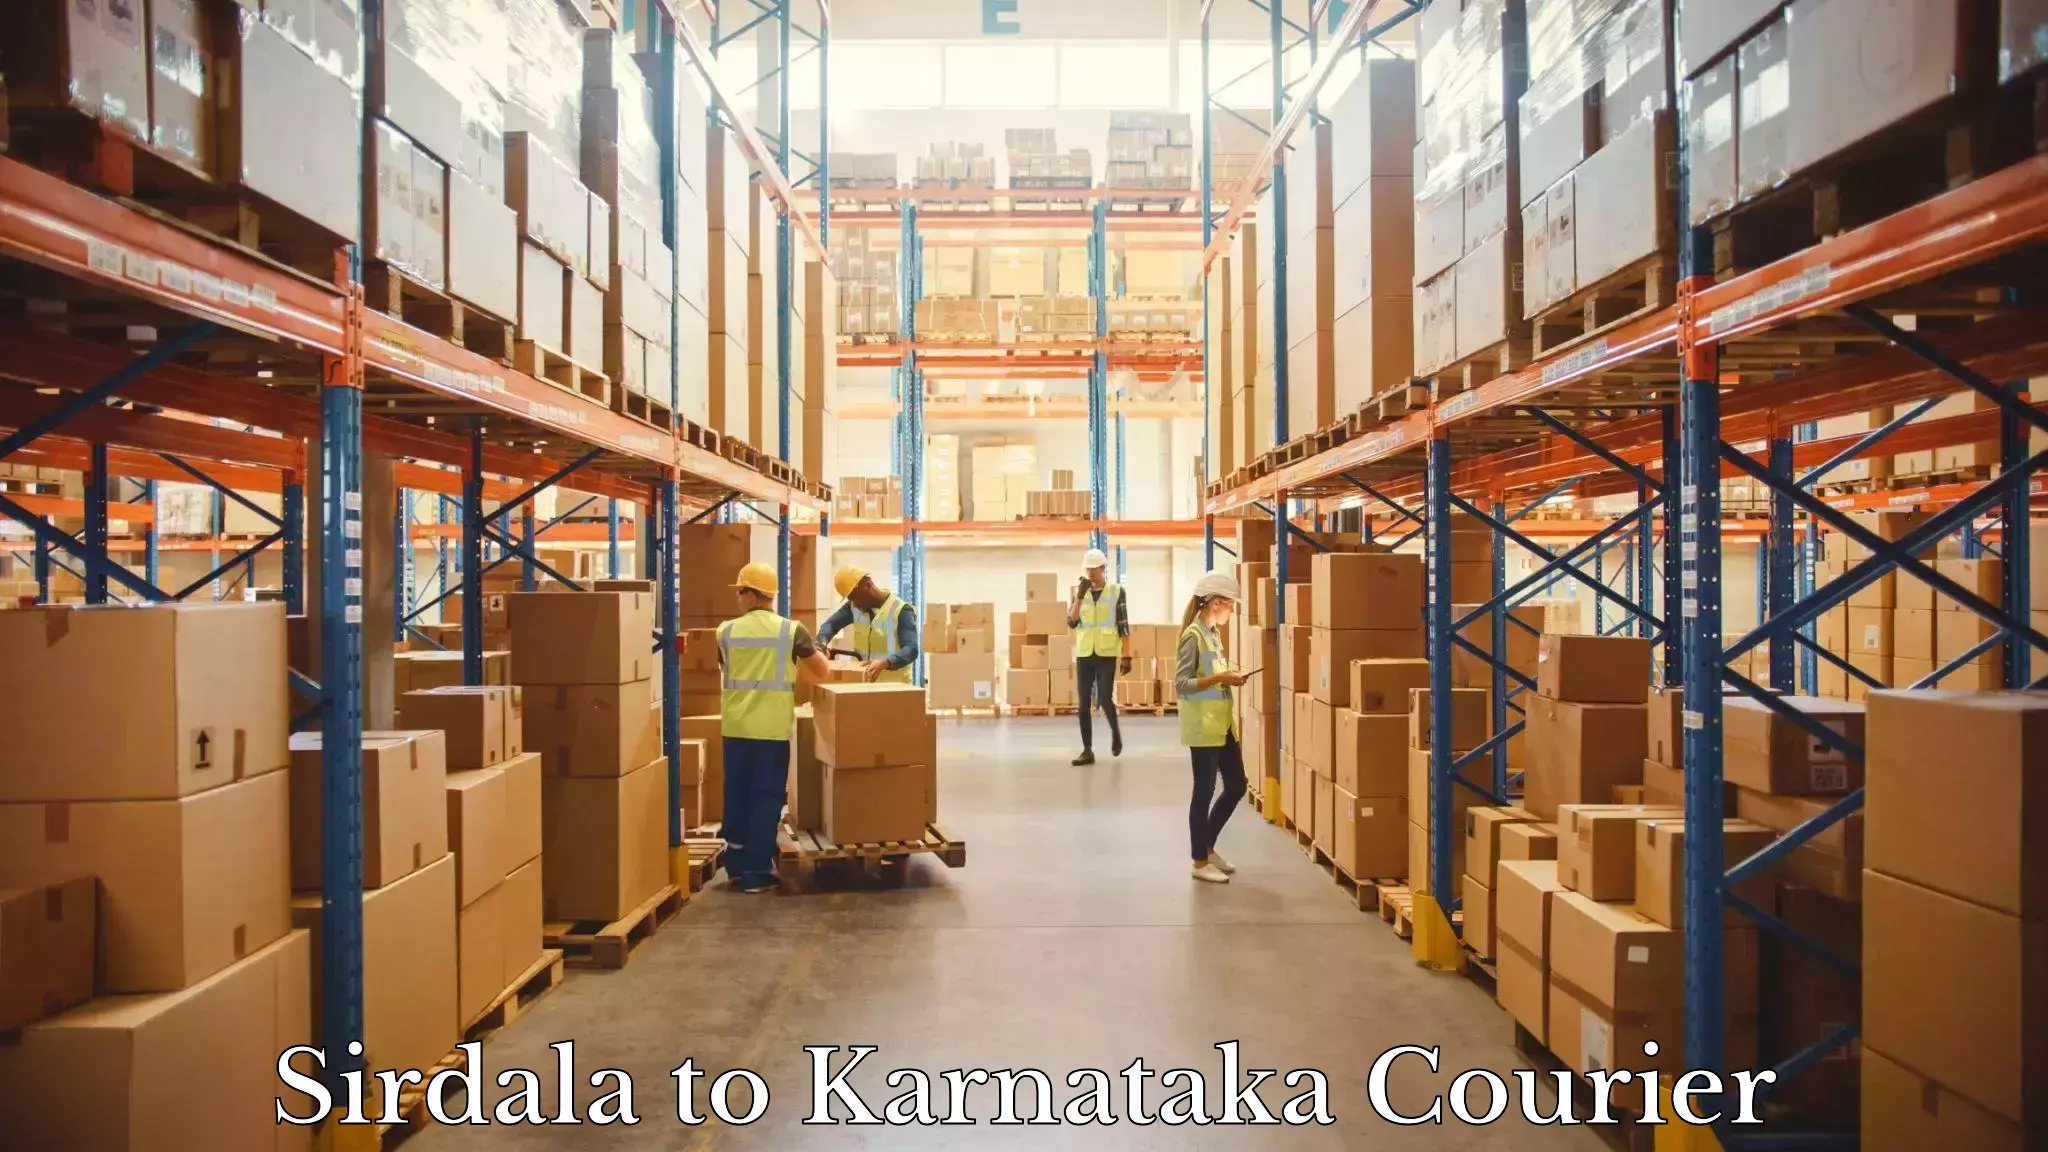 Courier service efficiency Sirdala to Kanjarakatte